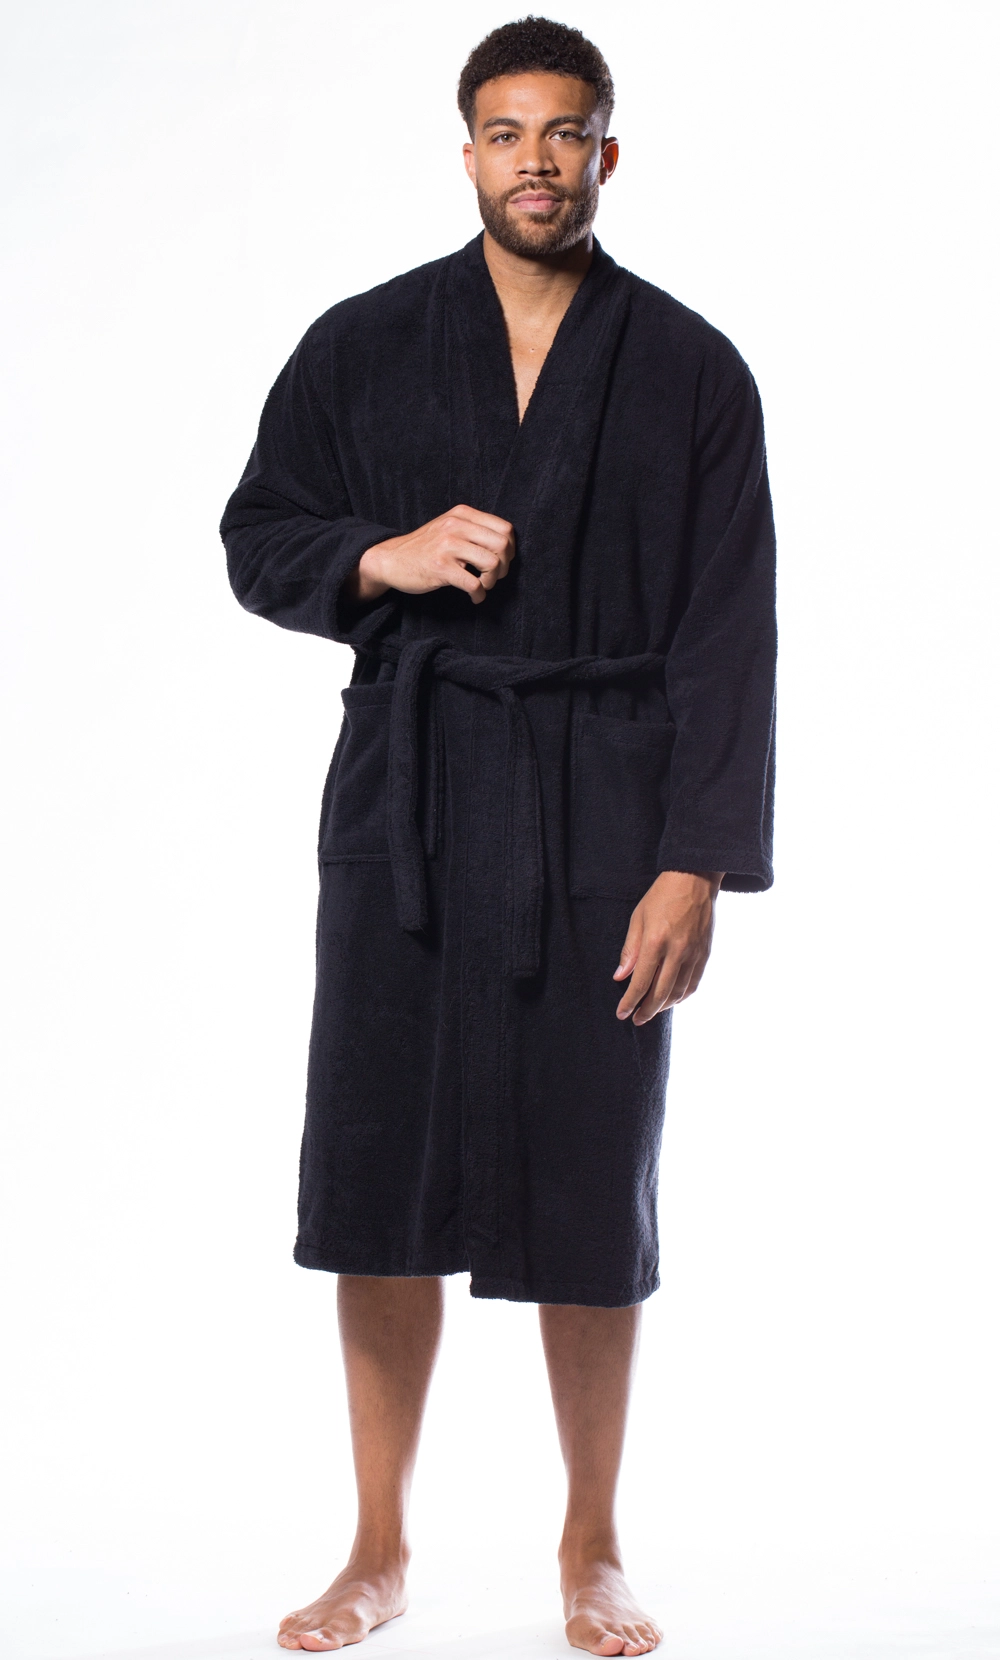 CHGBMOK Clearance Men's Satin Robe Lightweight Bathrobe with